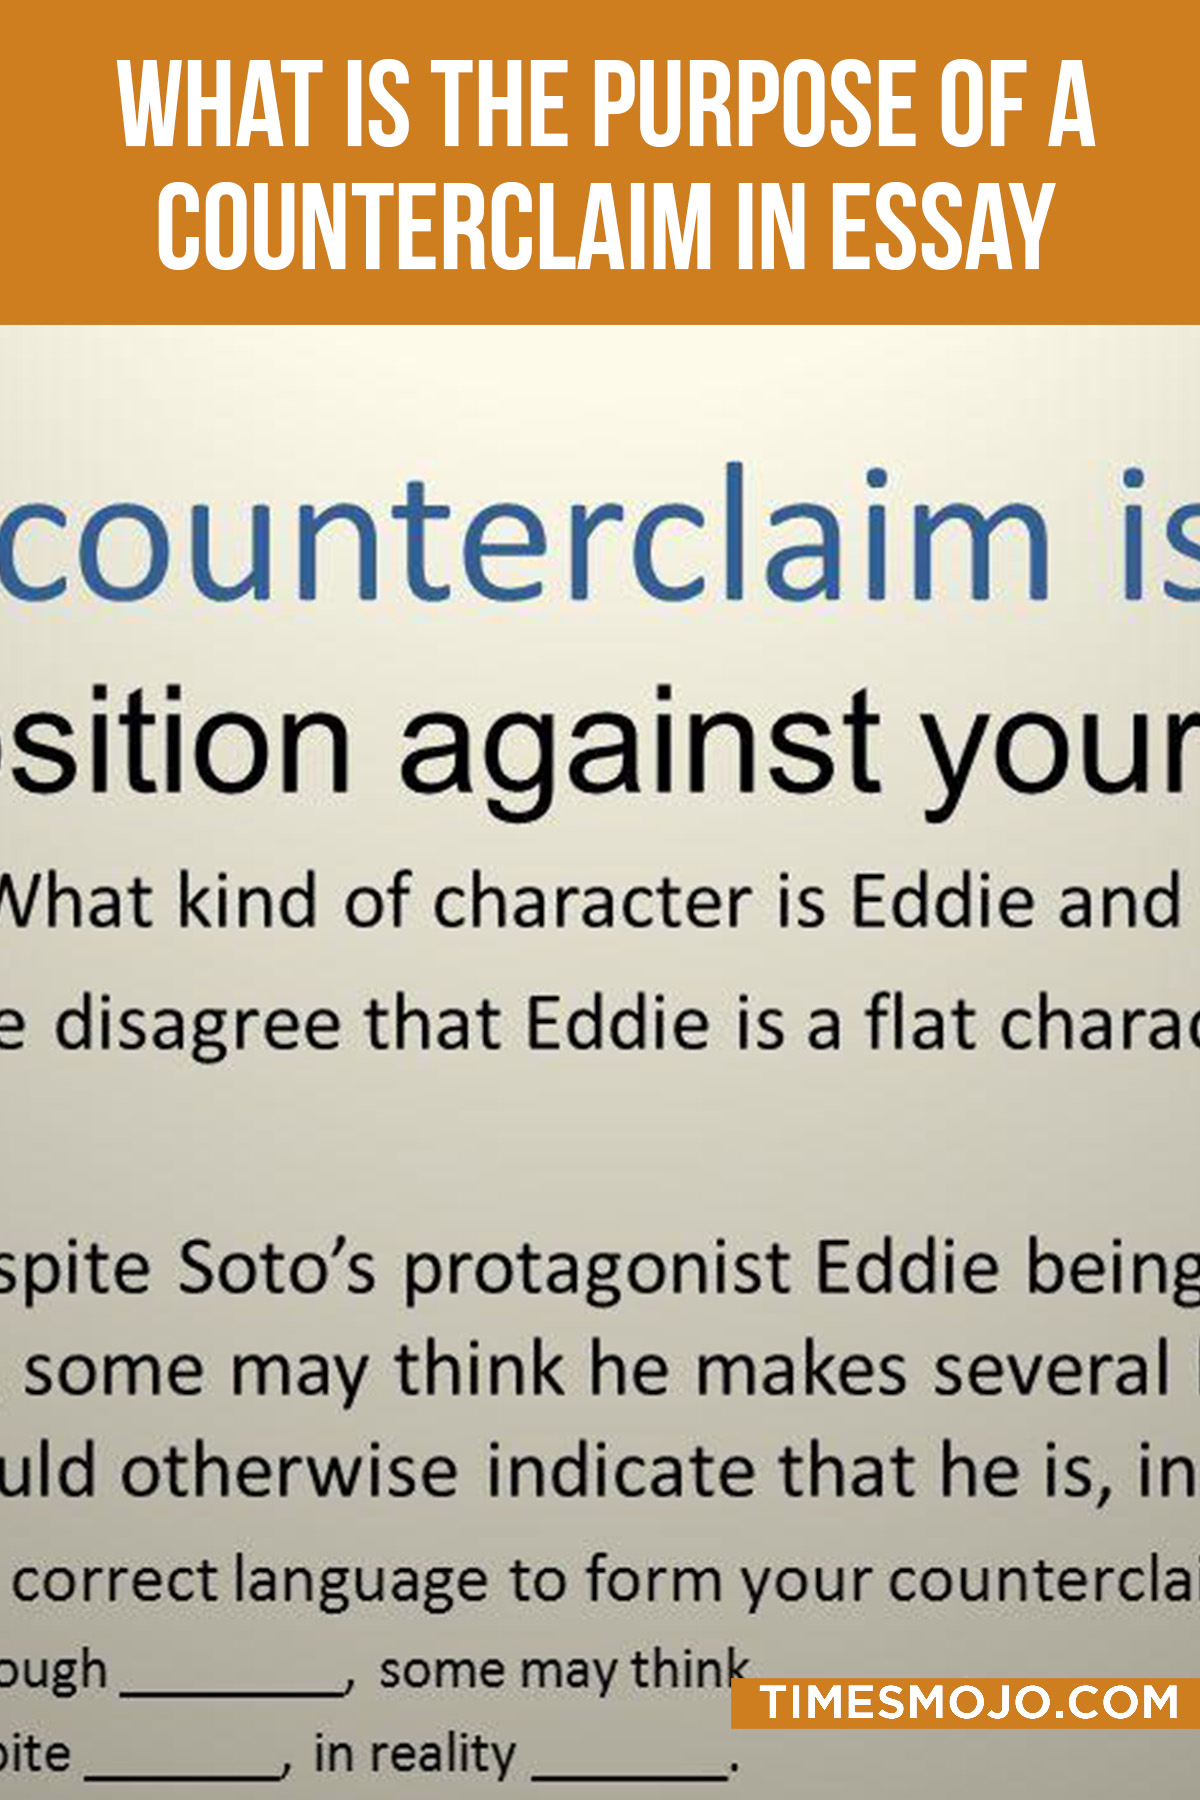 purpose of counterclaim in essay